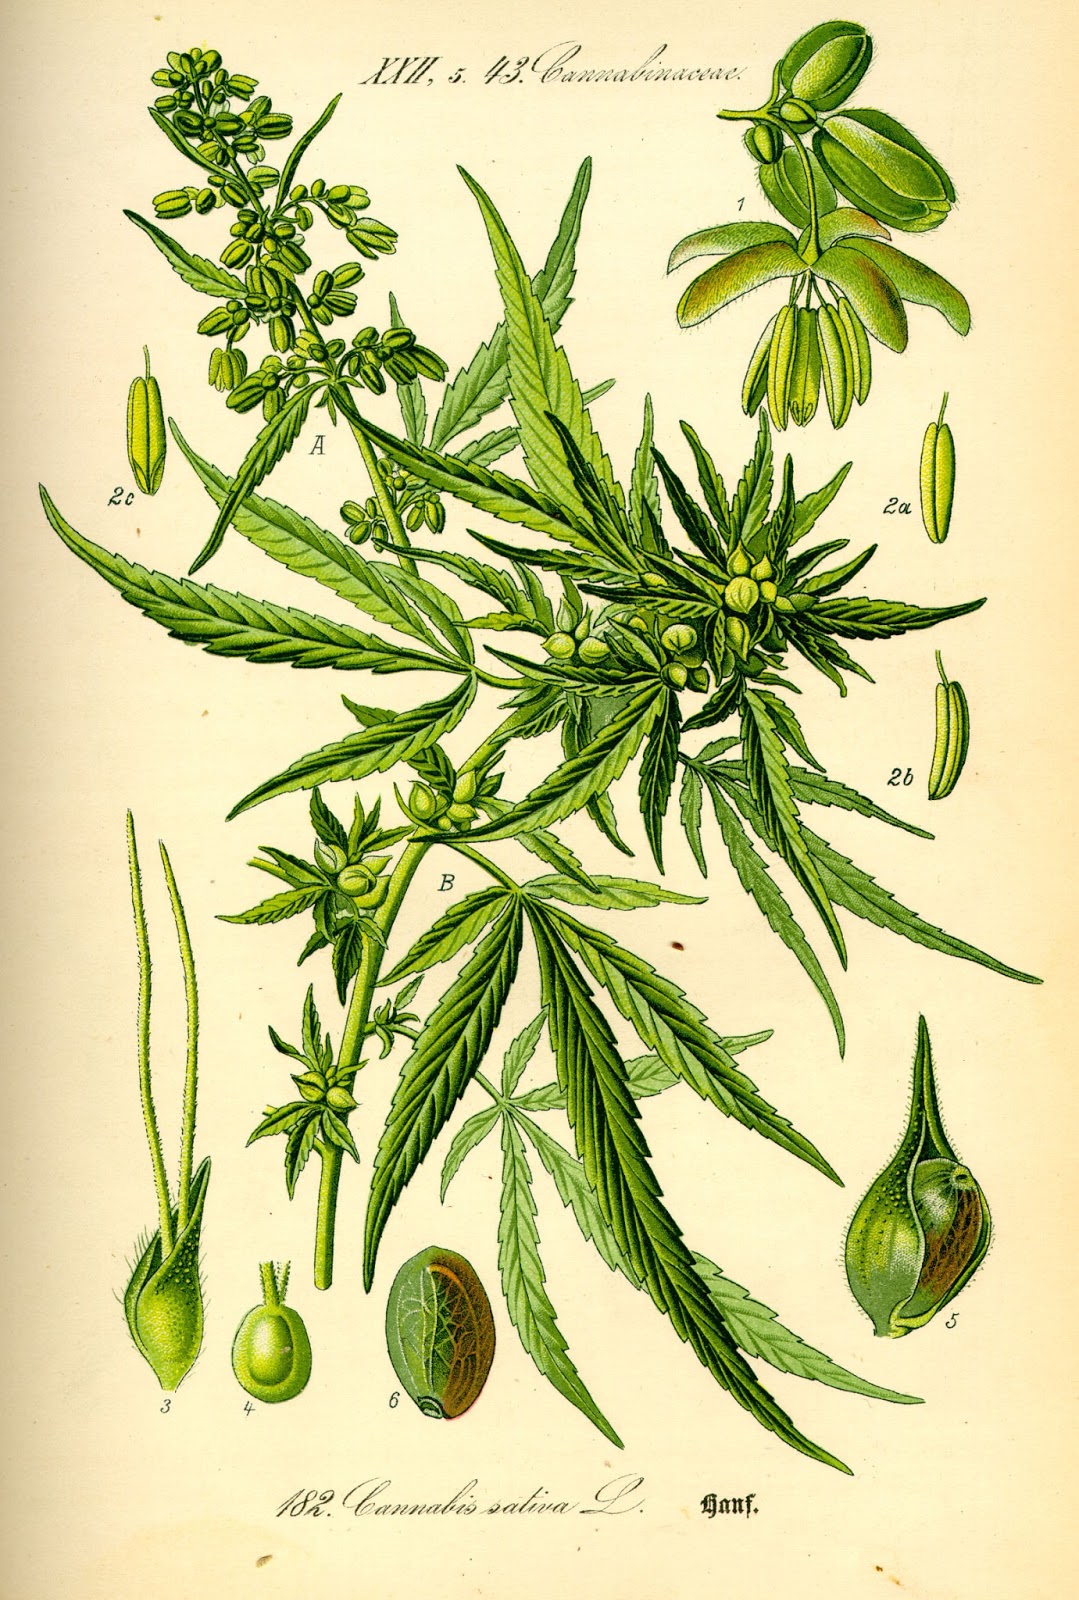 What is autoflowering cannabis?